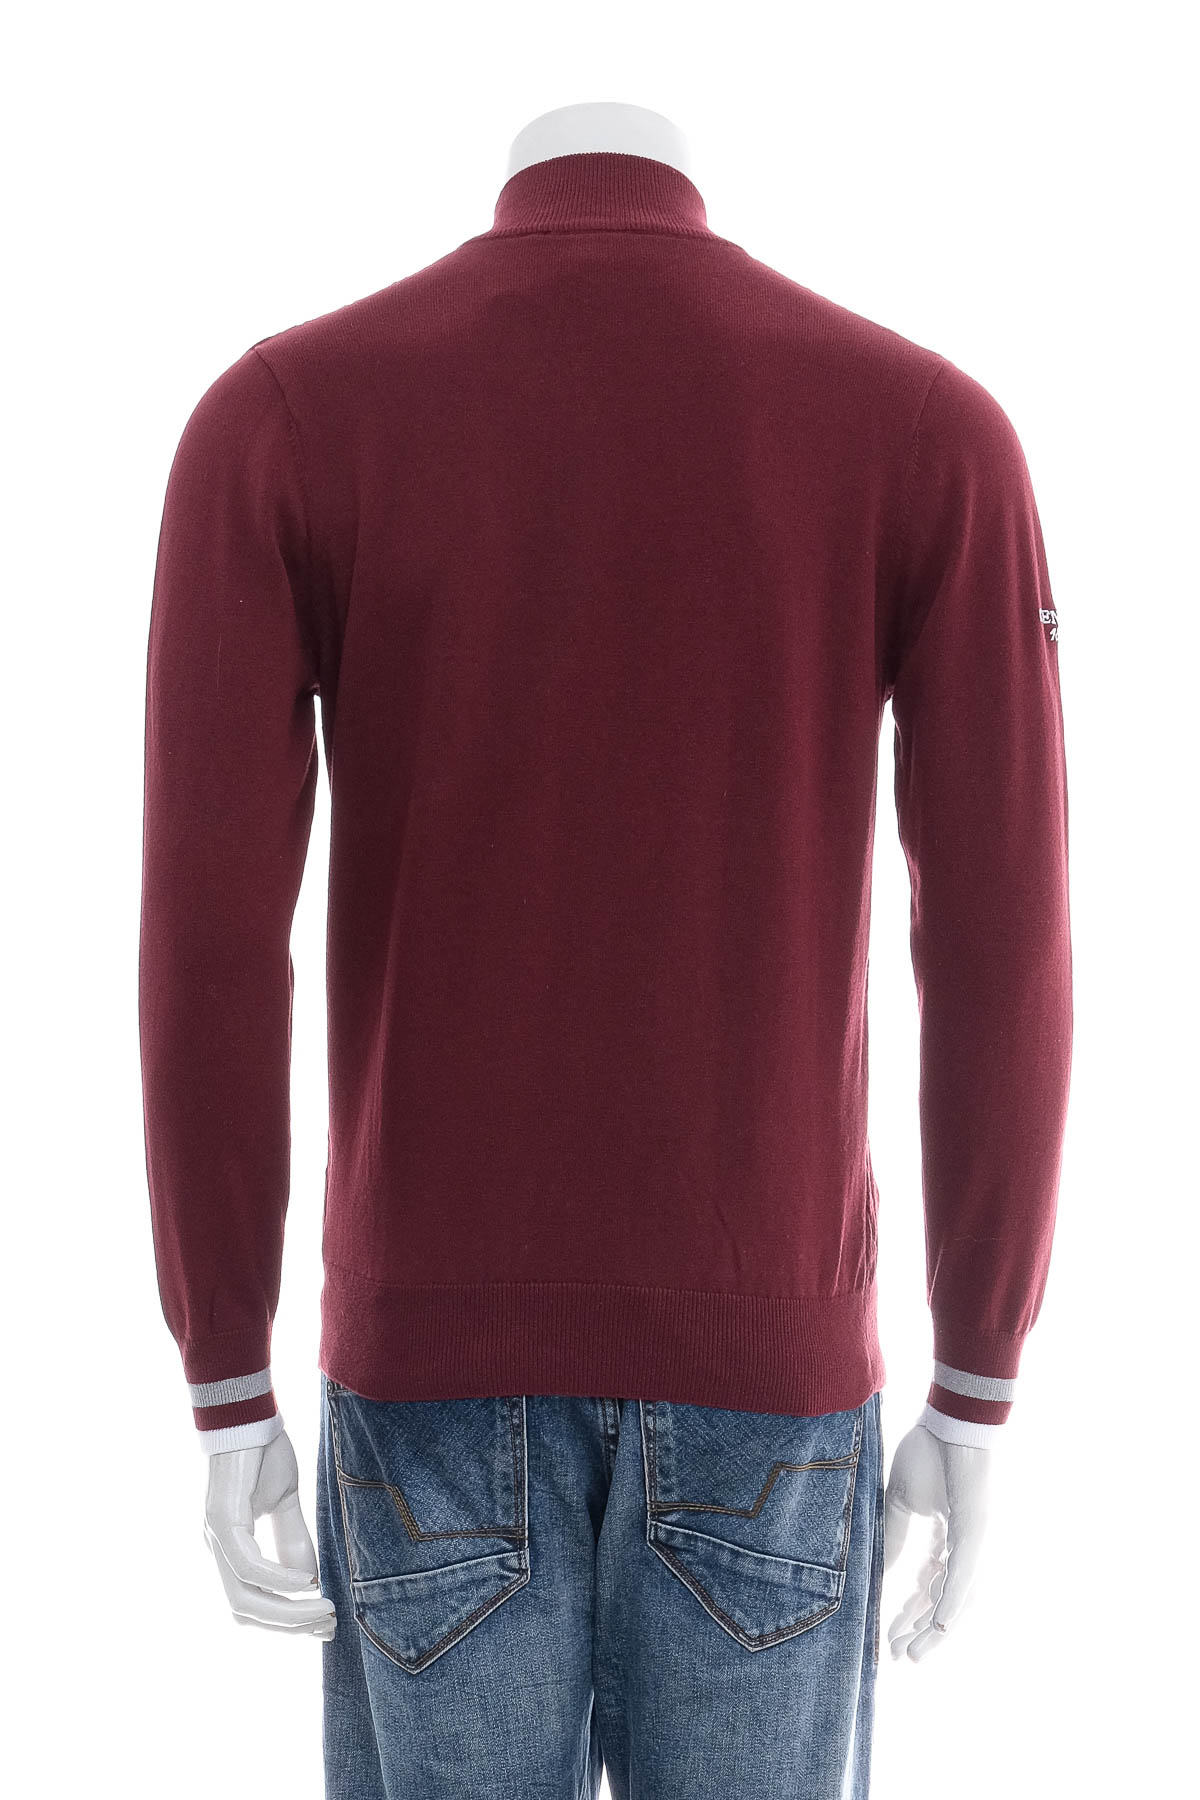 Men's sweater - Glenmuir - 1